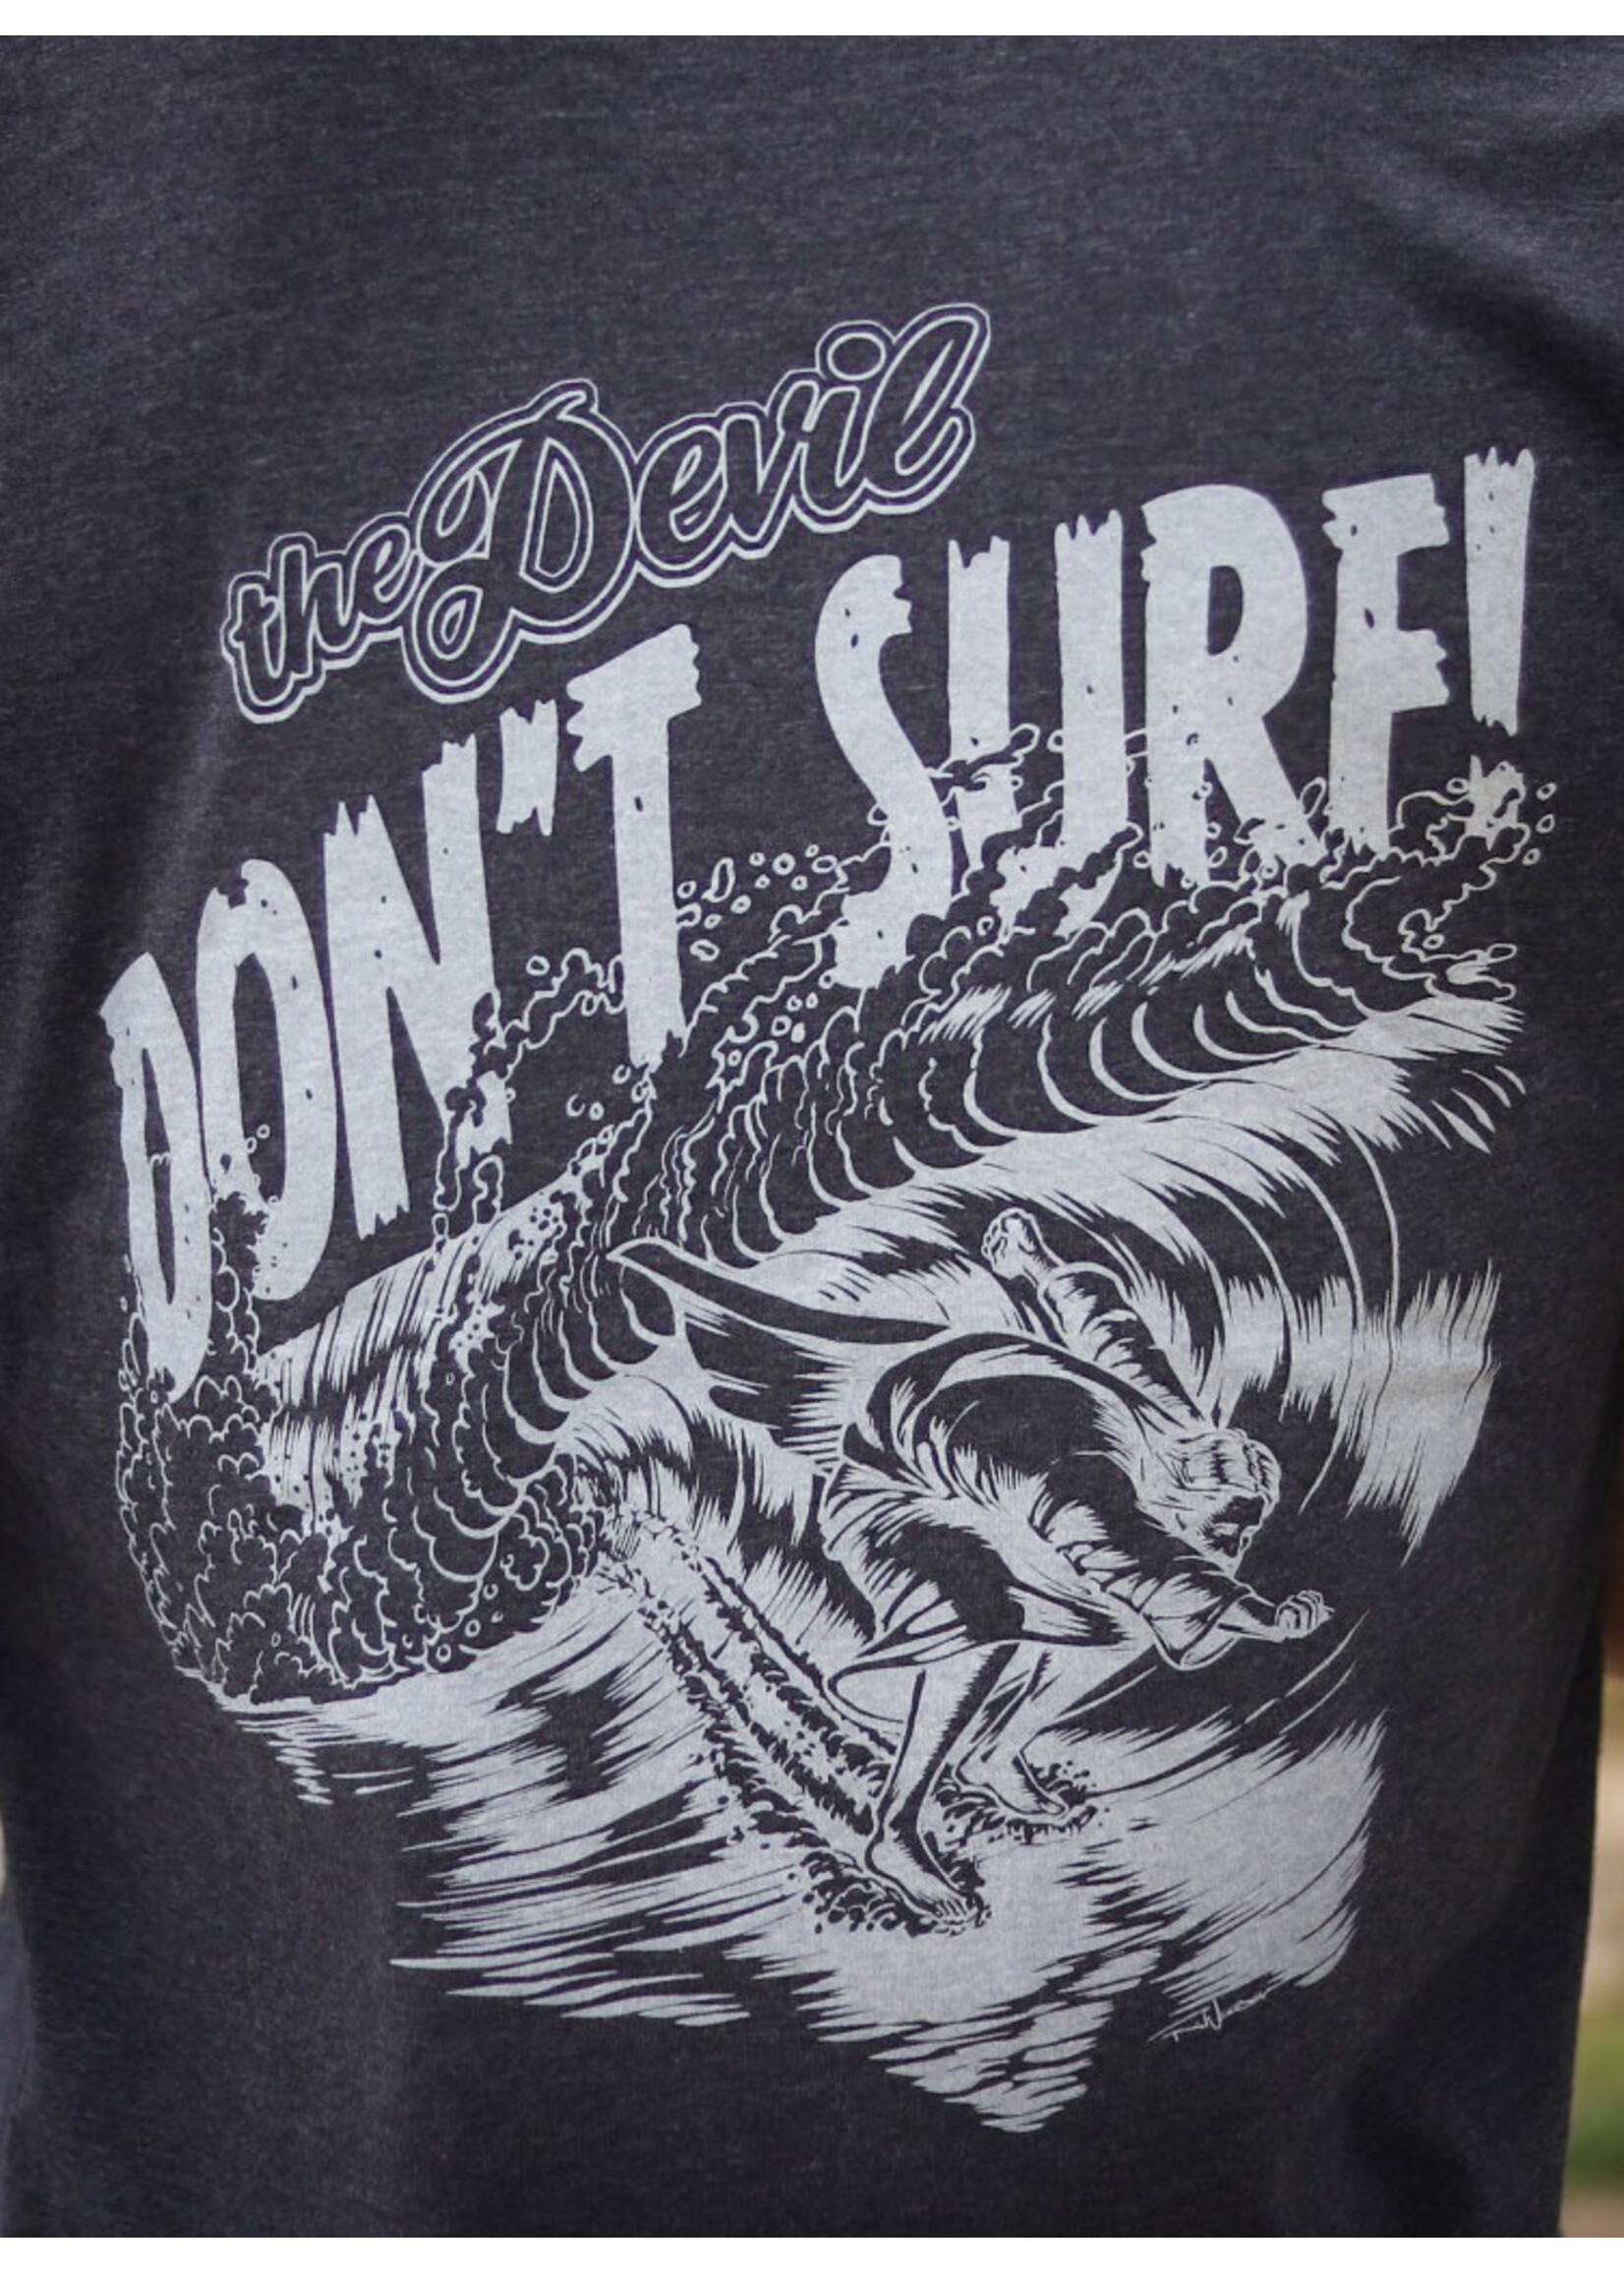 Mr Surfs Mr Surfs Devil Don't Surf Short Sleeve T-Shirt